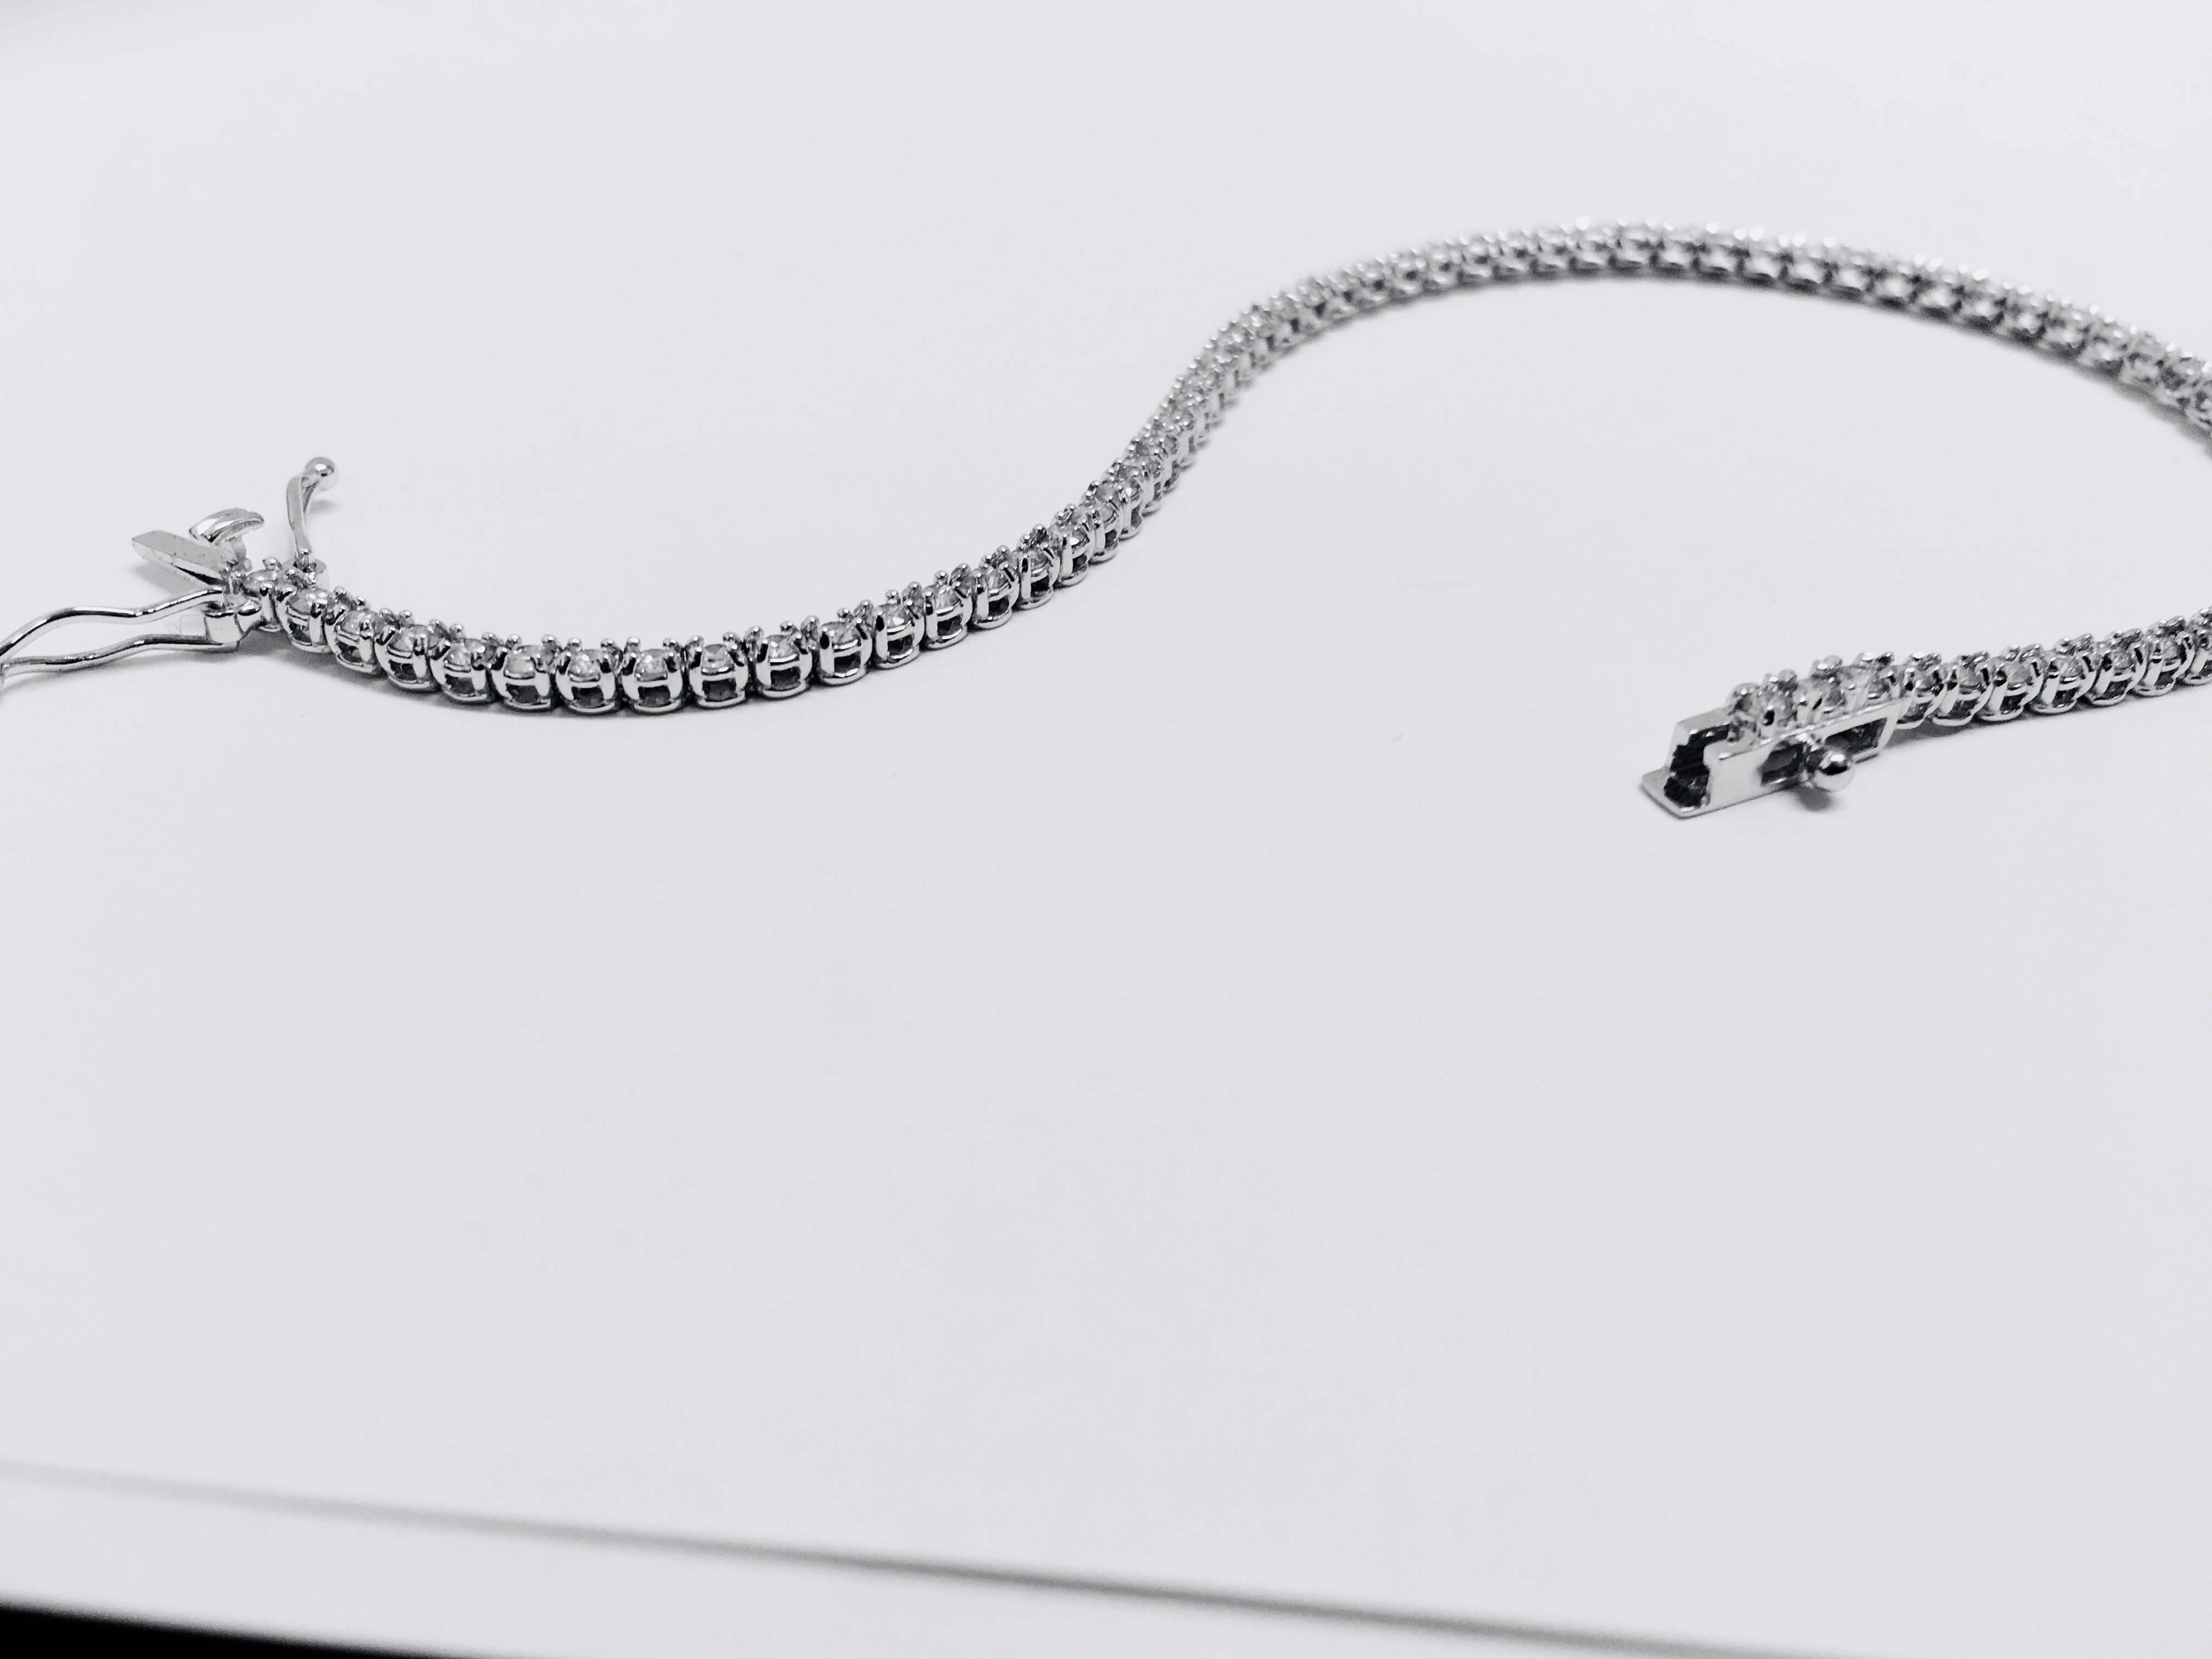 2.10ct diamond tennis bracelet with 70 brilliant cut diamonds - Image 26 of 28